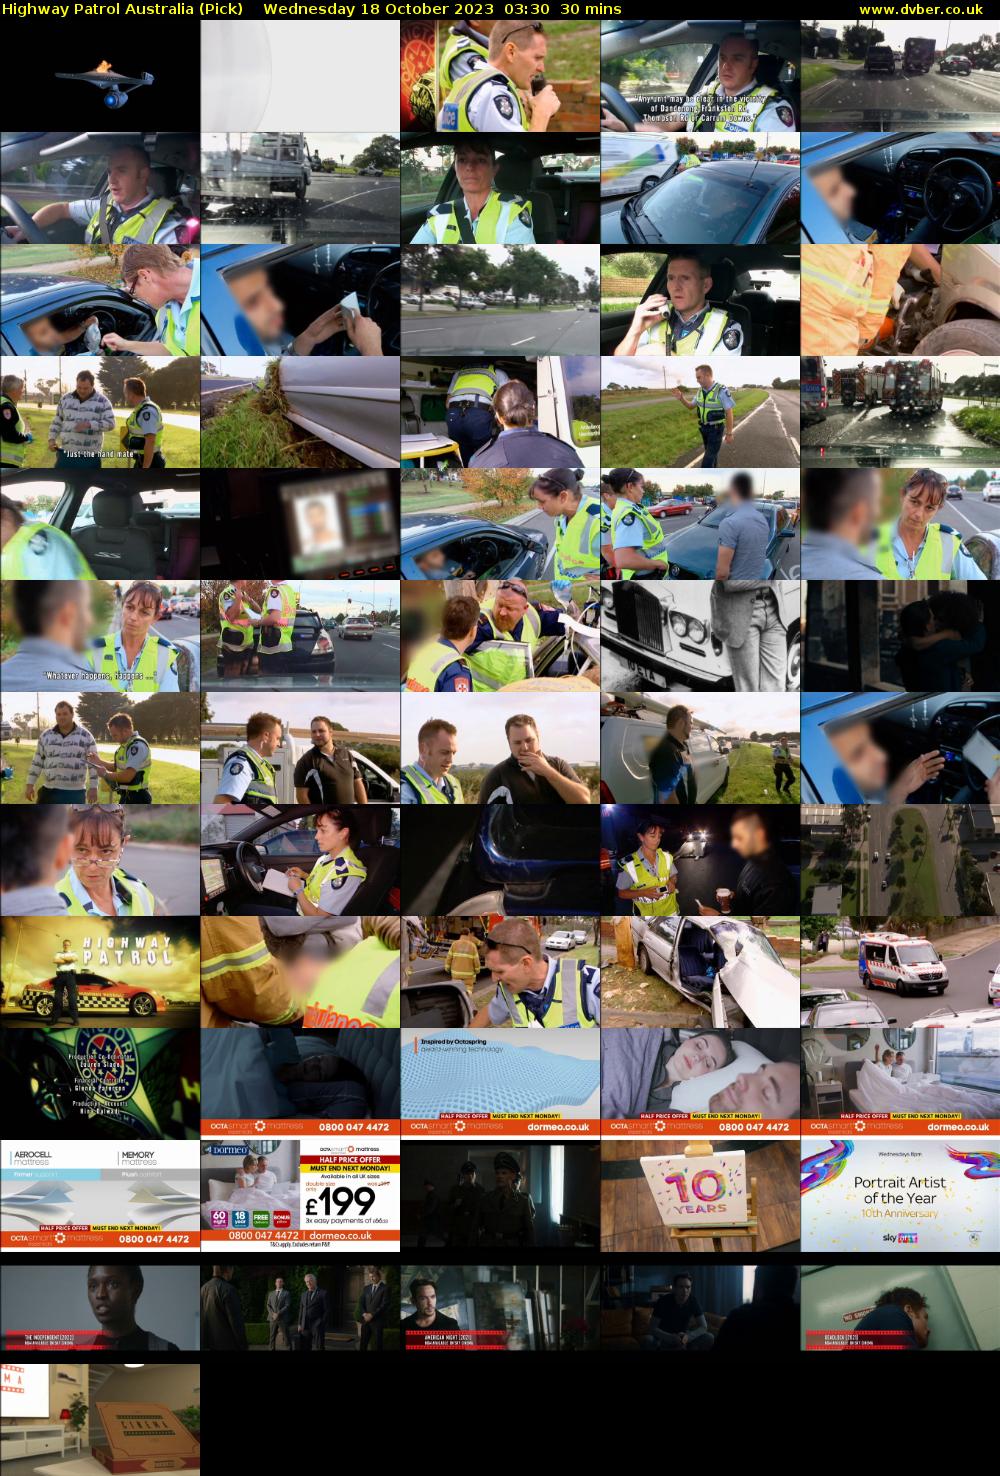 Highway Patrol Australia (Pick) Wednesday 18 October 2023 03:30 - 04:00